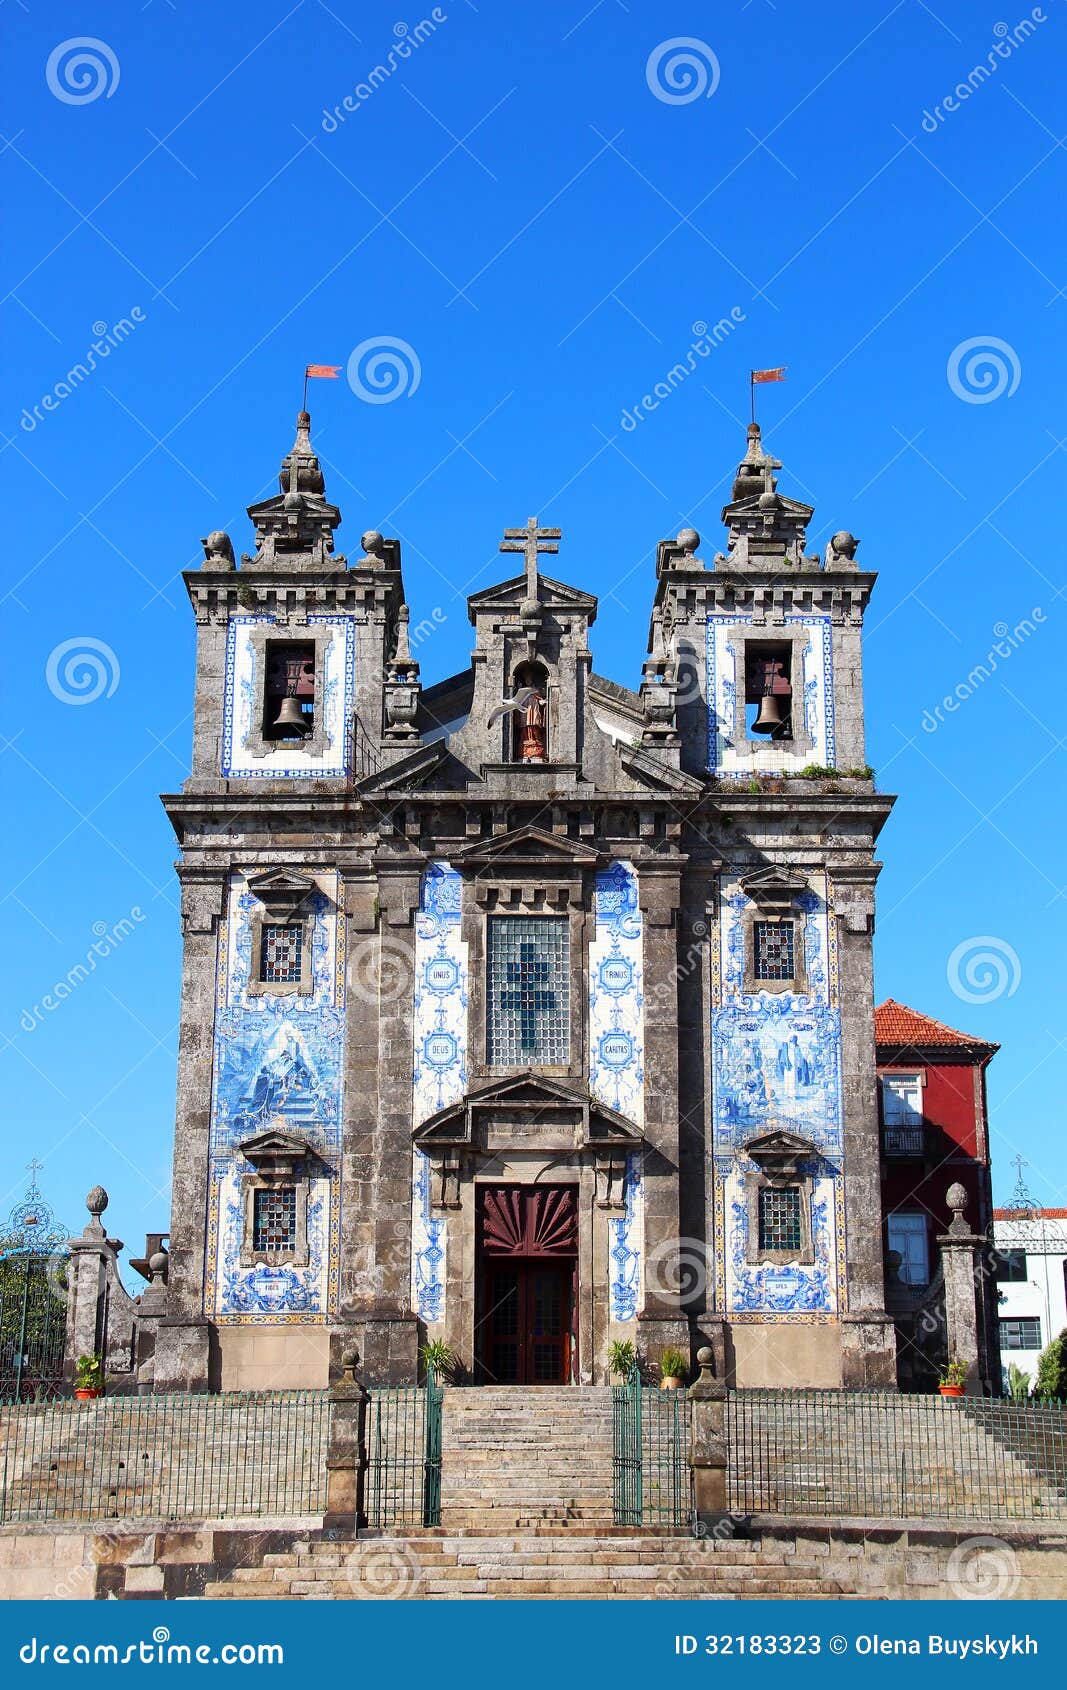 church of santo ildefonso, porto, portugal